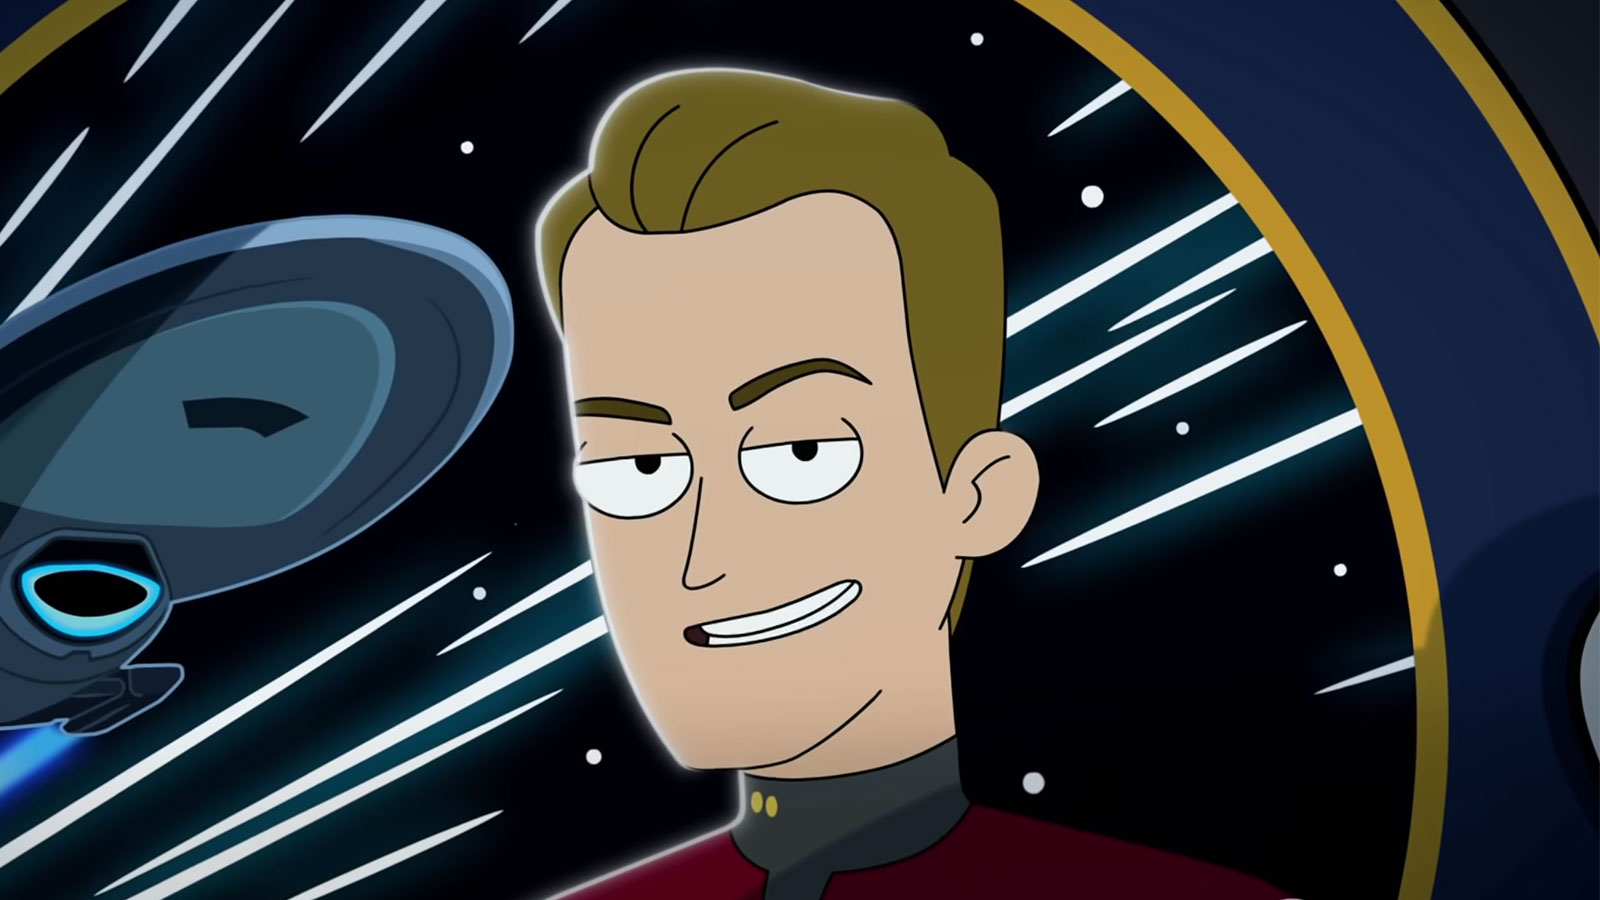 New Images From Star Trek: Lower Decks Season 2 Episode 3 "We'll Always Have Tom Paris"